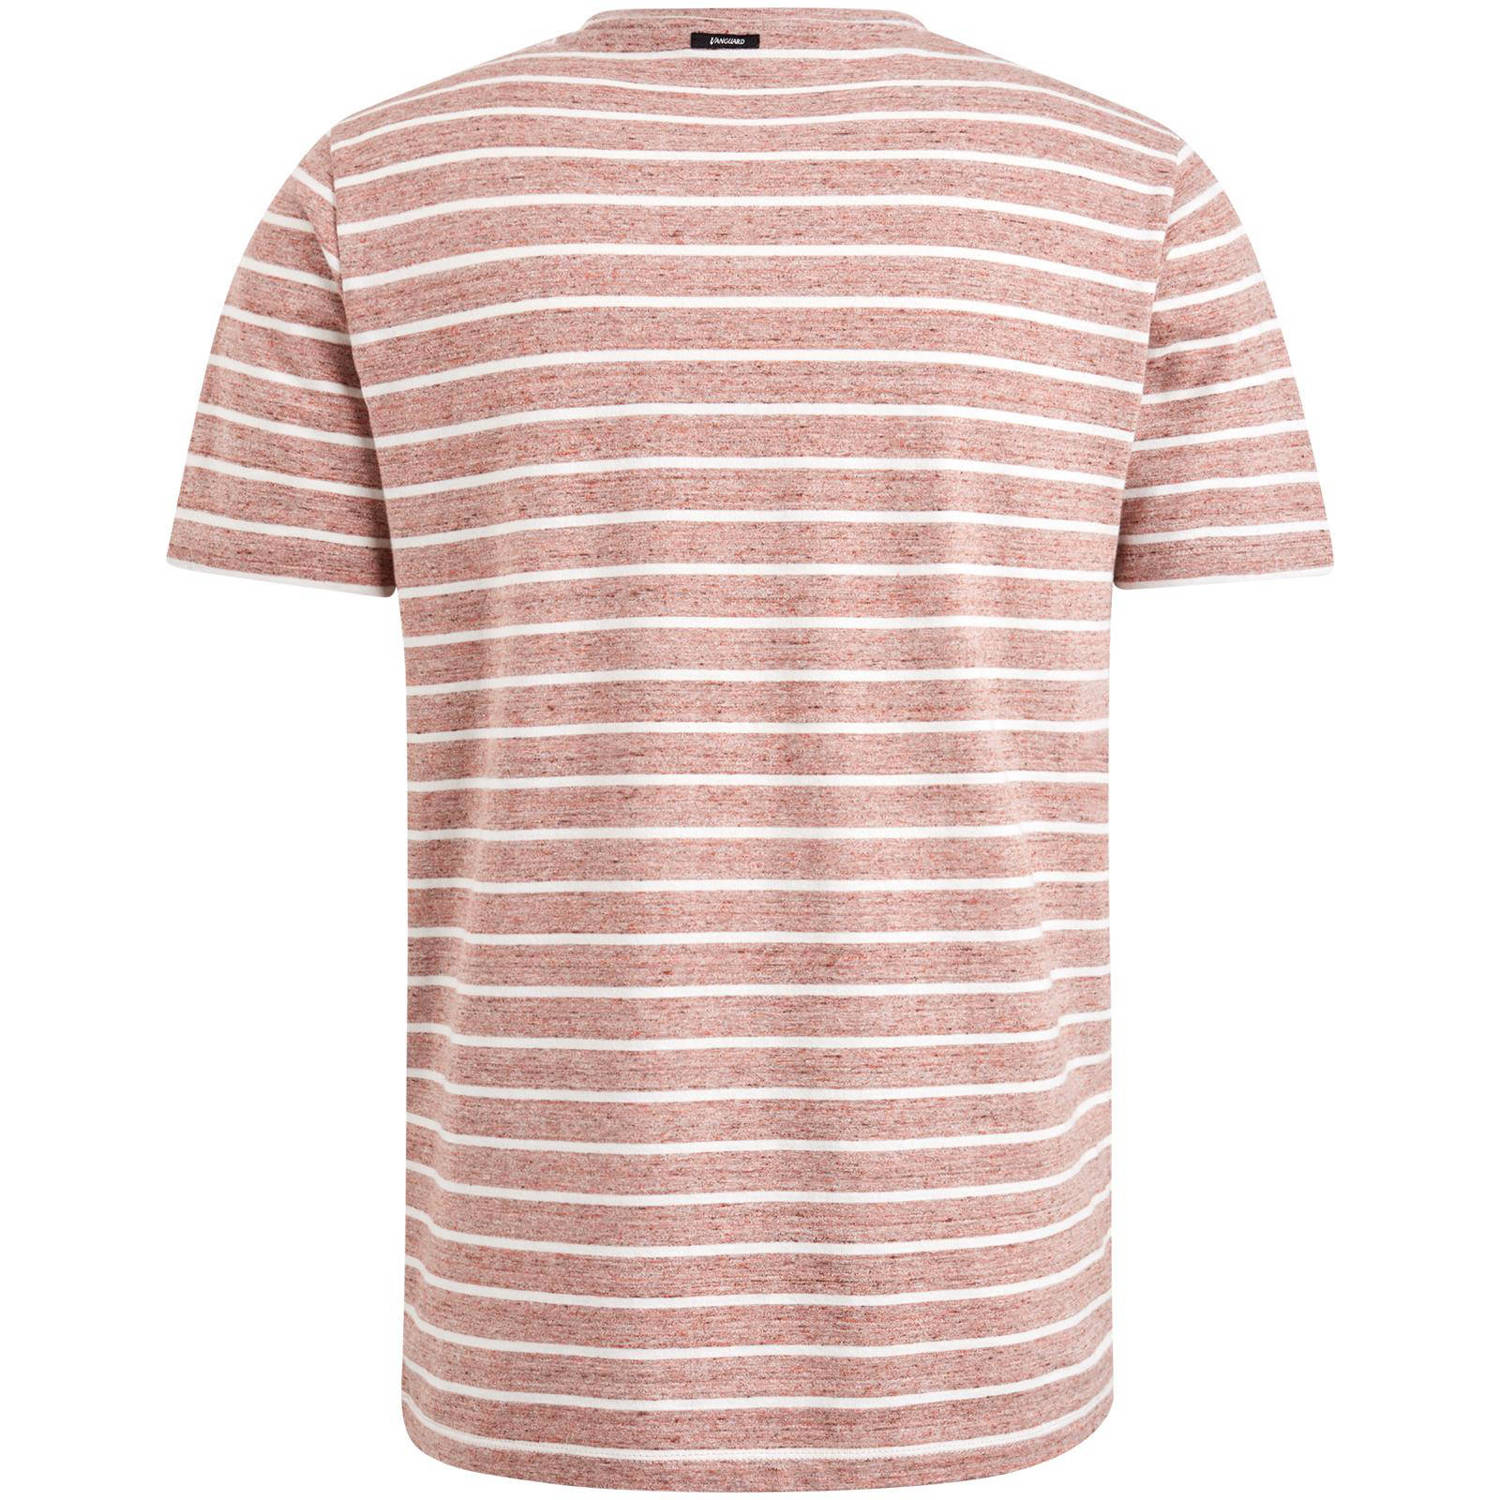 Vanguard gestreept regular fit T-shirt bruin roze